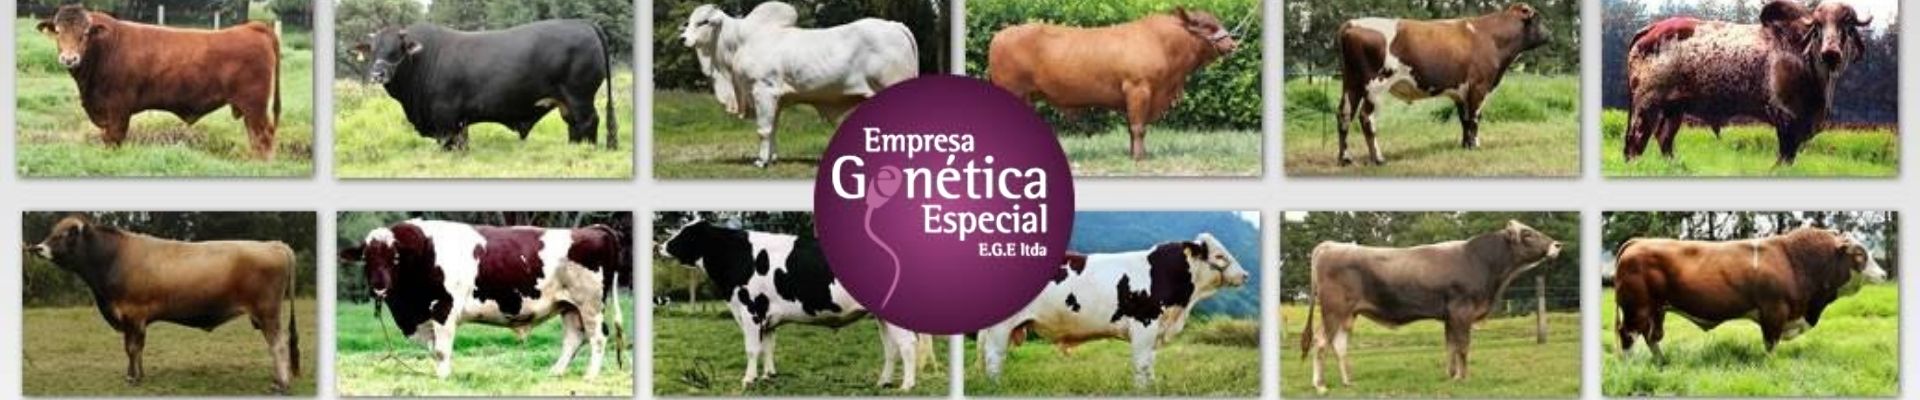 Empresa-Genética-Especial-agroshow